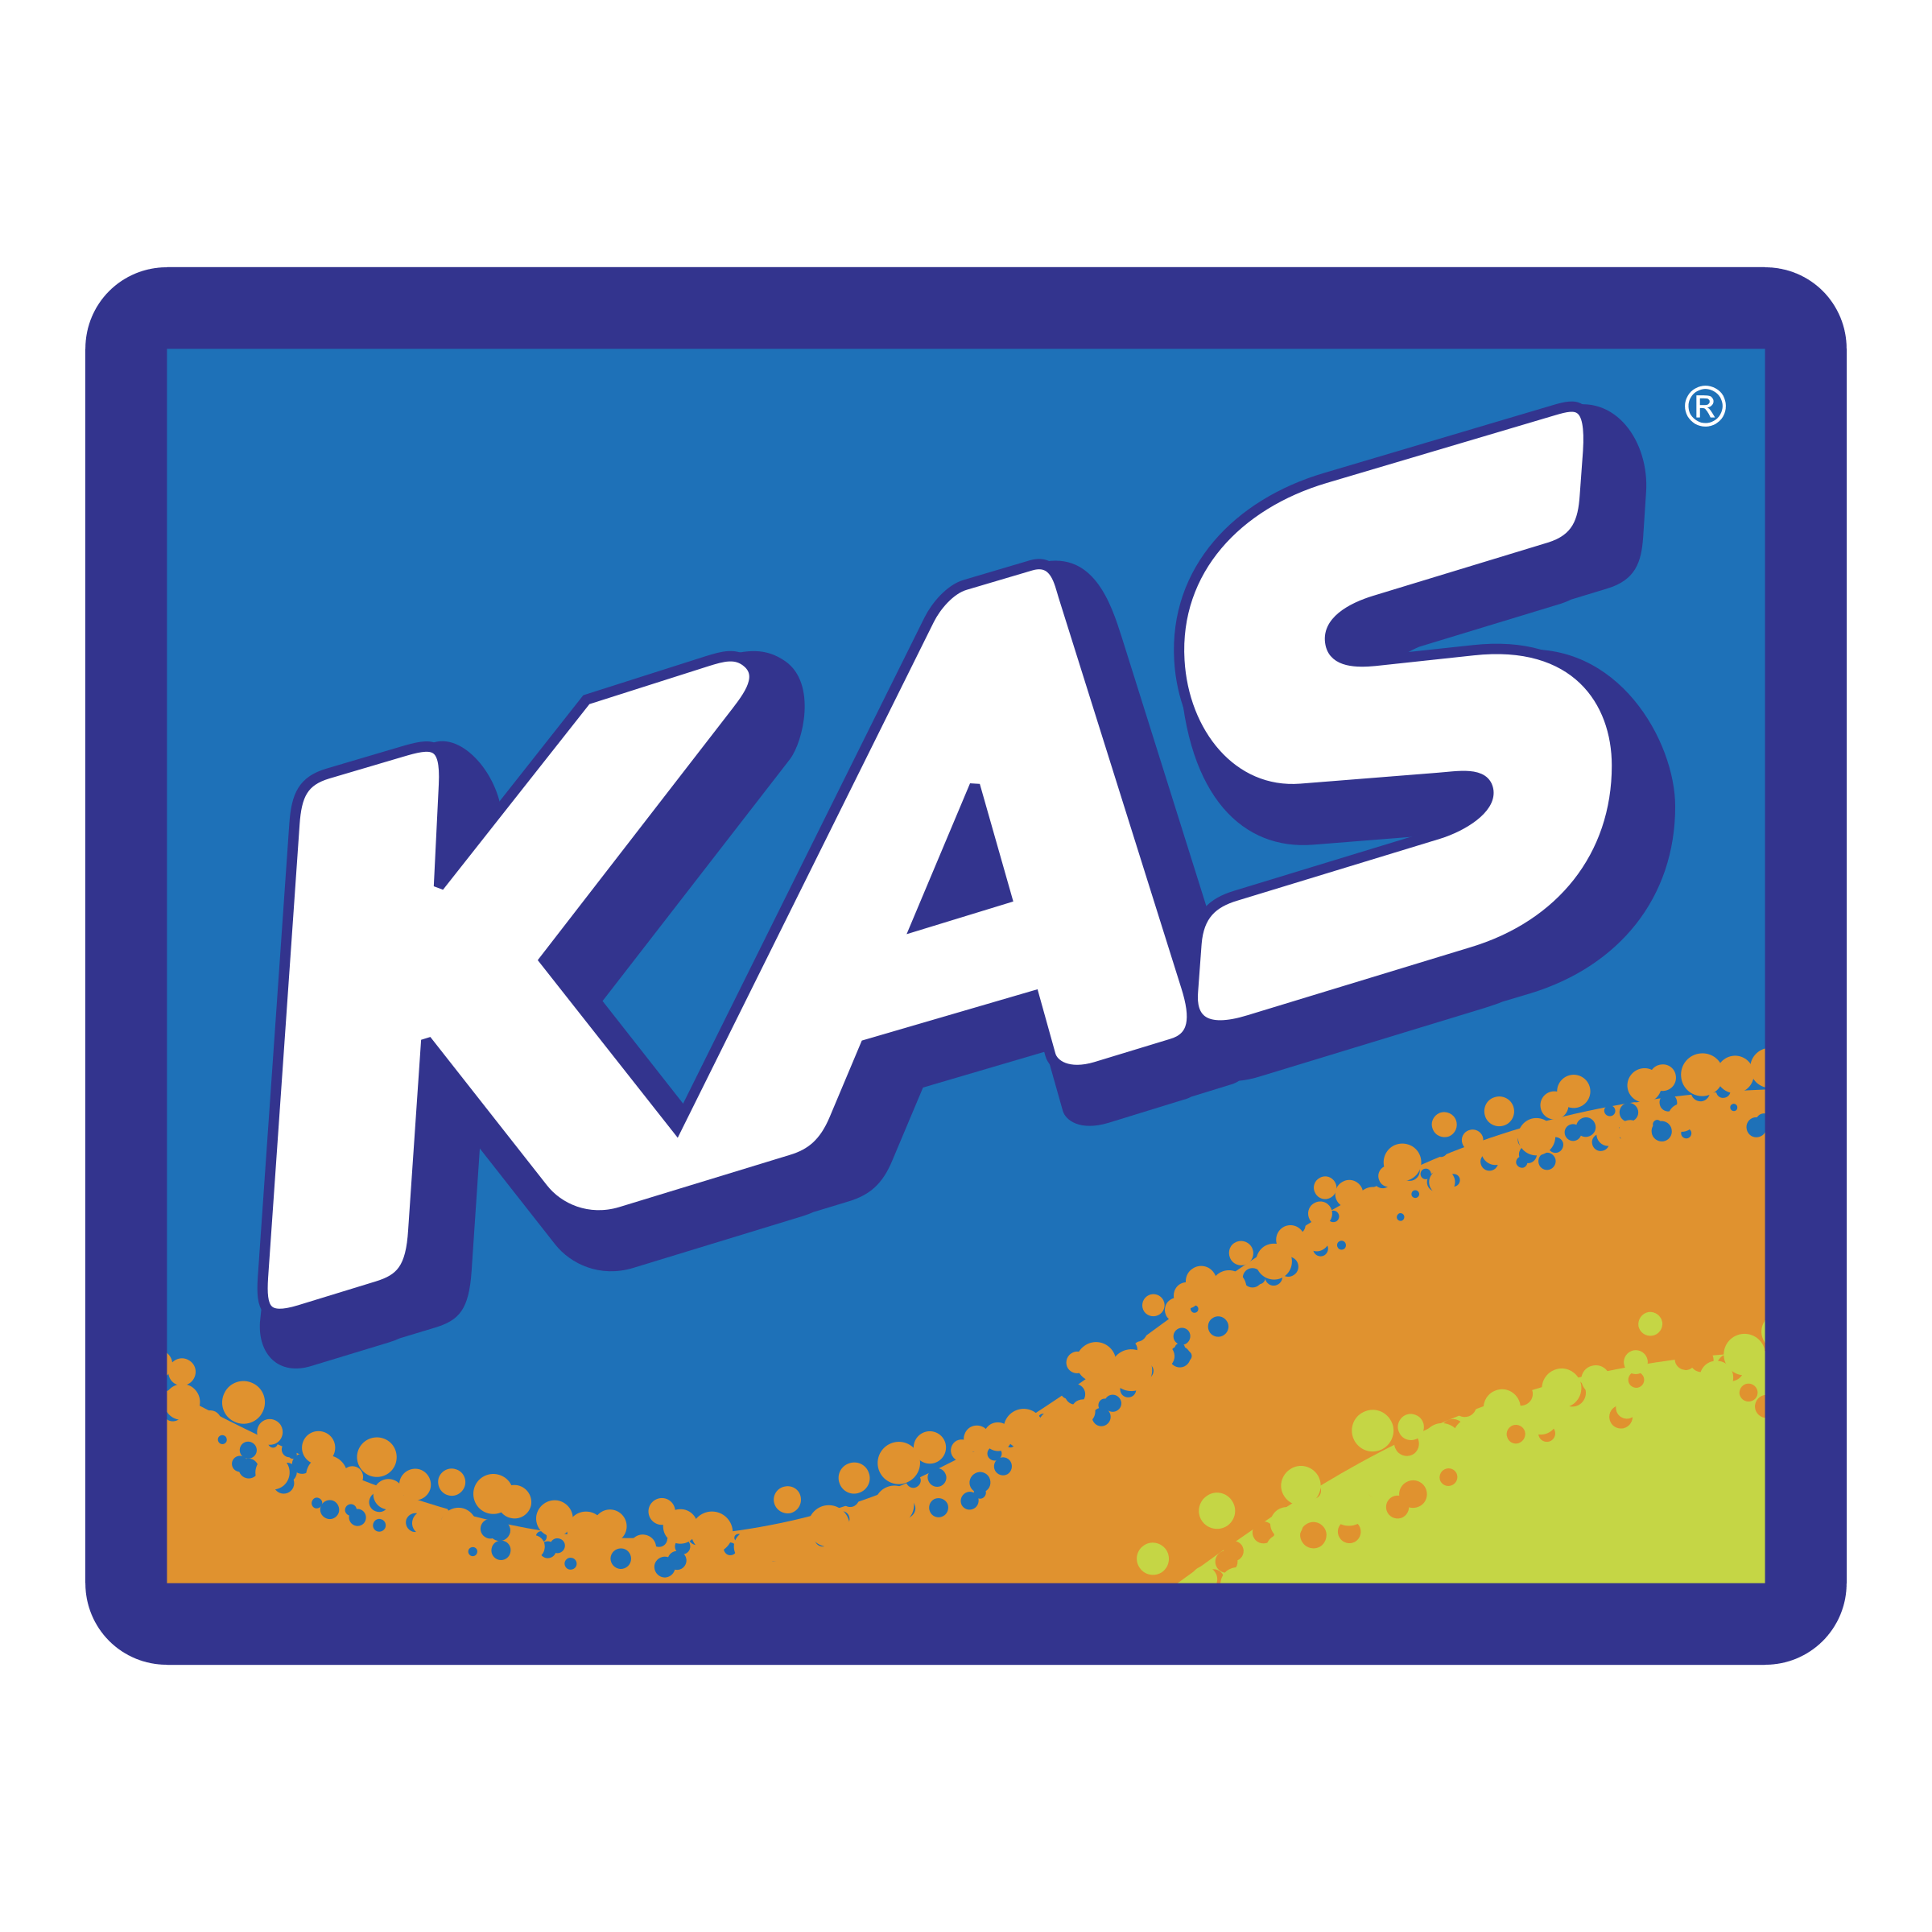 Kas Logo - KAS Logo PNG Transparent & SVG Vector